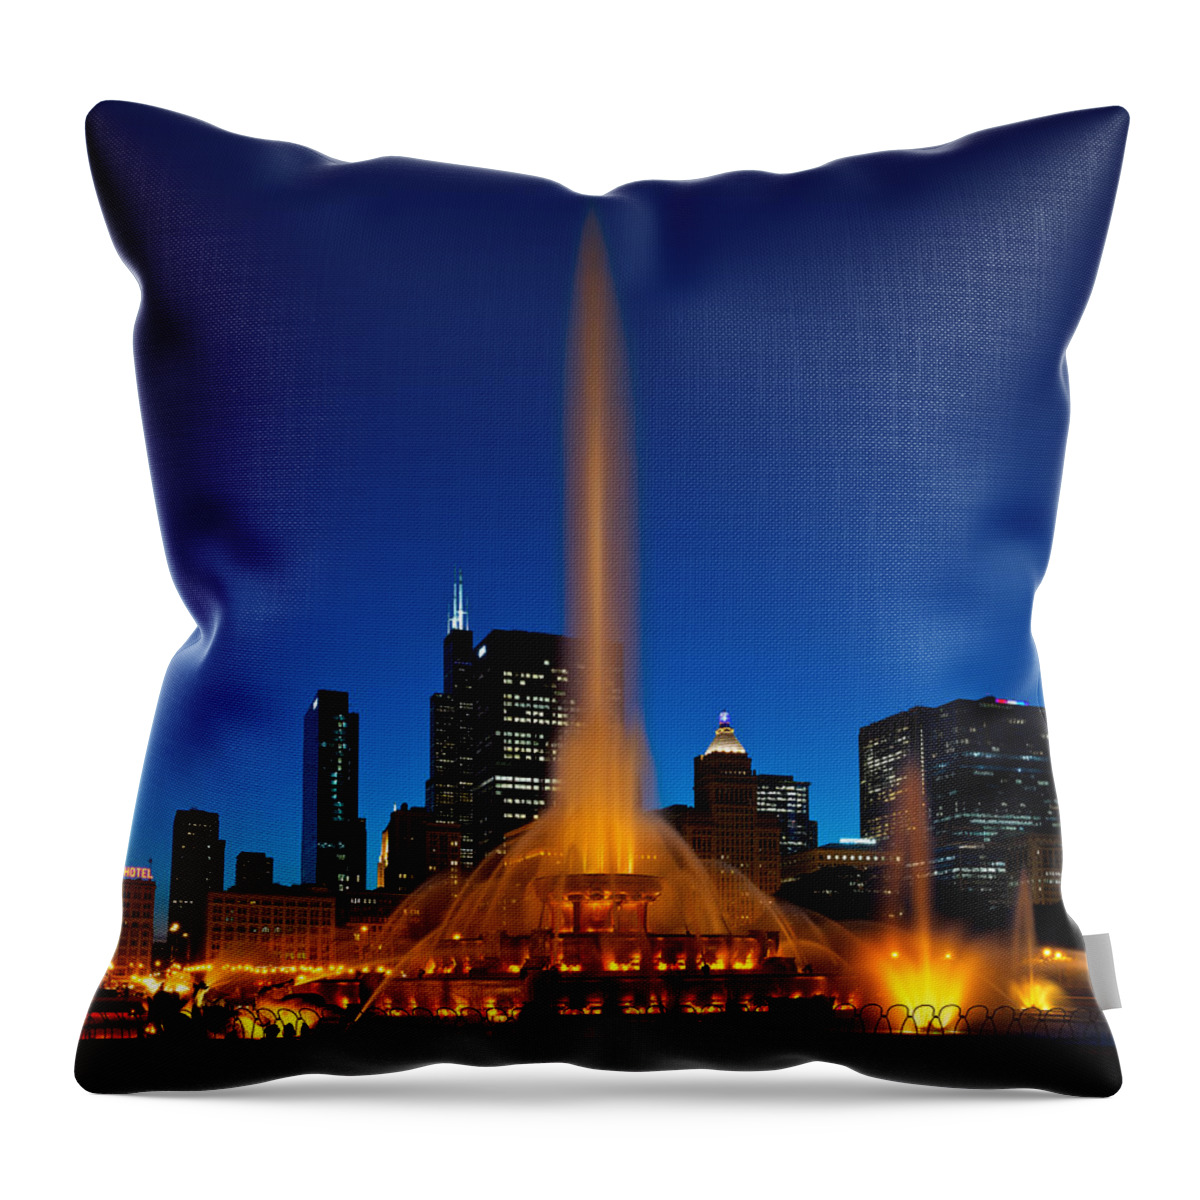 Chicago Throw Pillow featuring the photograph Buckingham Fountain Nightlight Chicago by Steve Gadomski